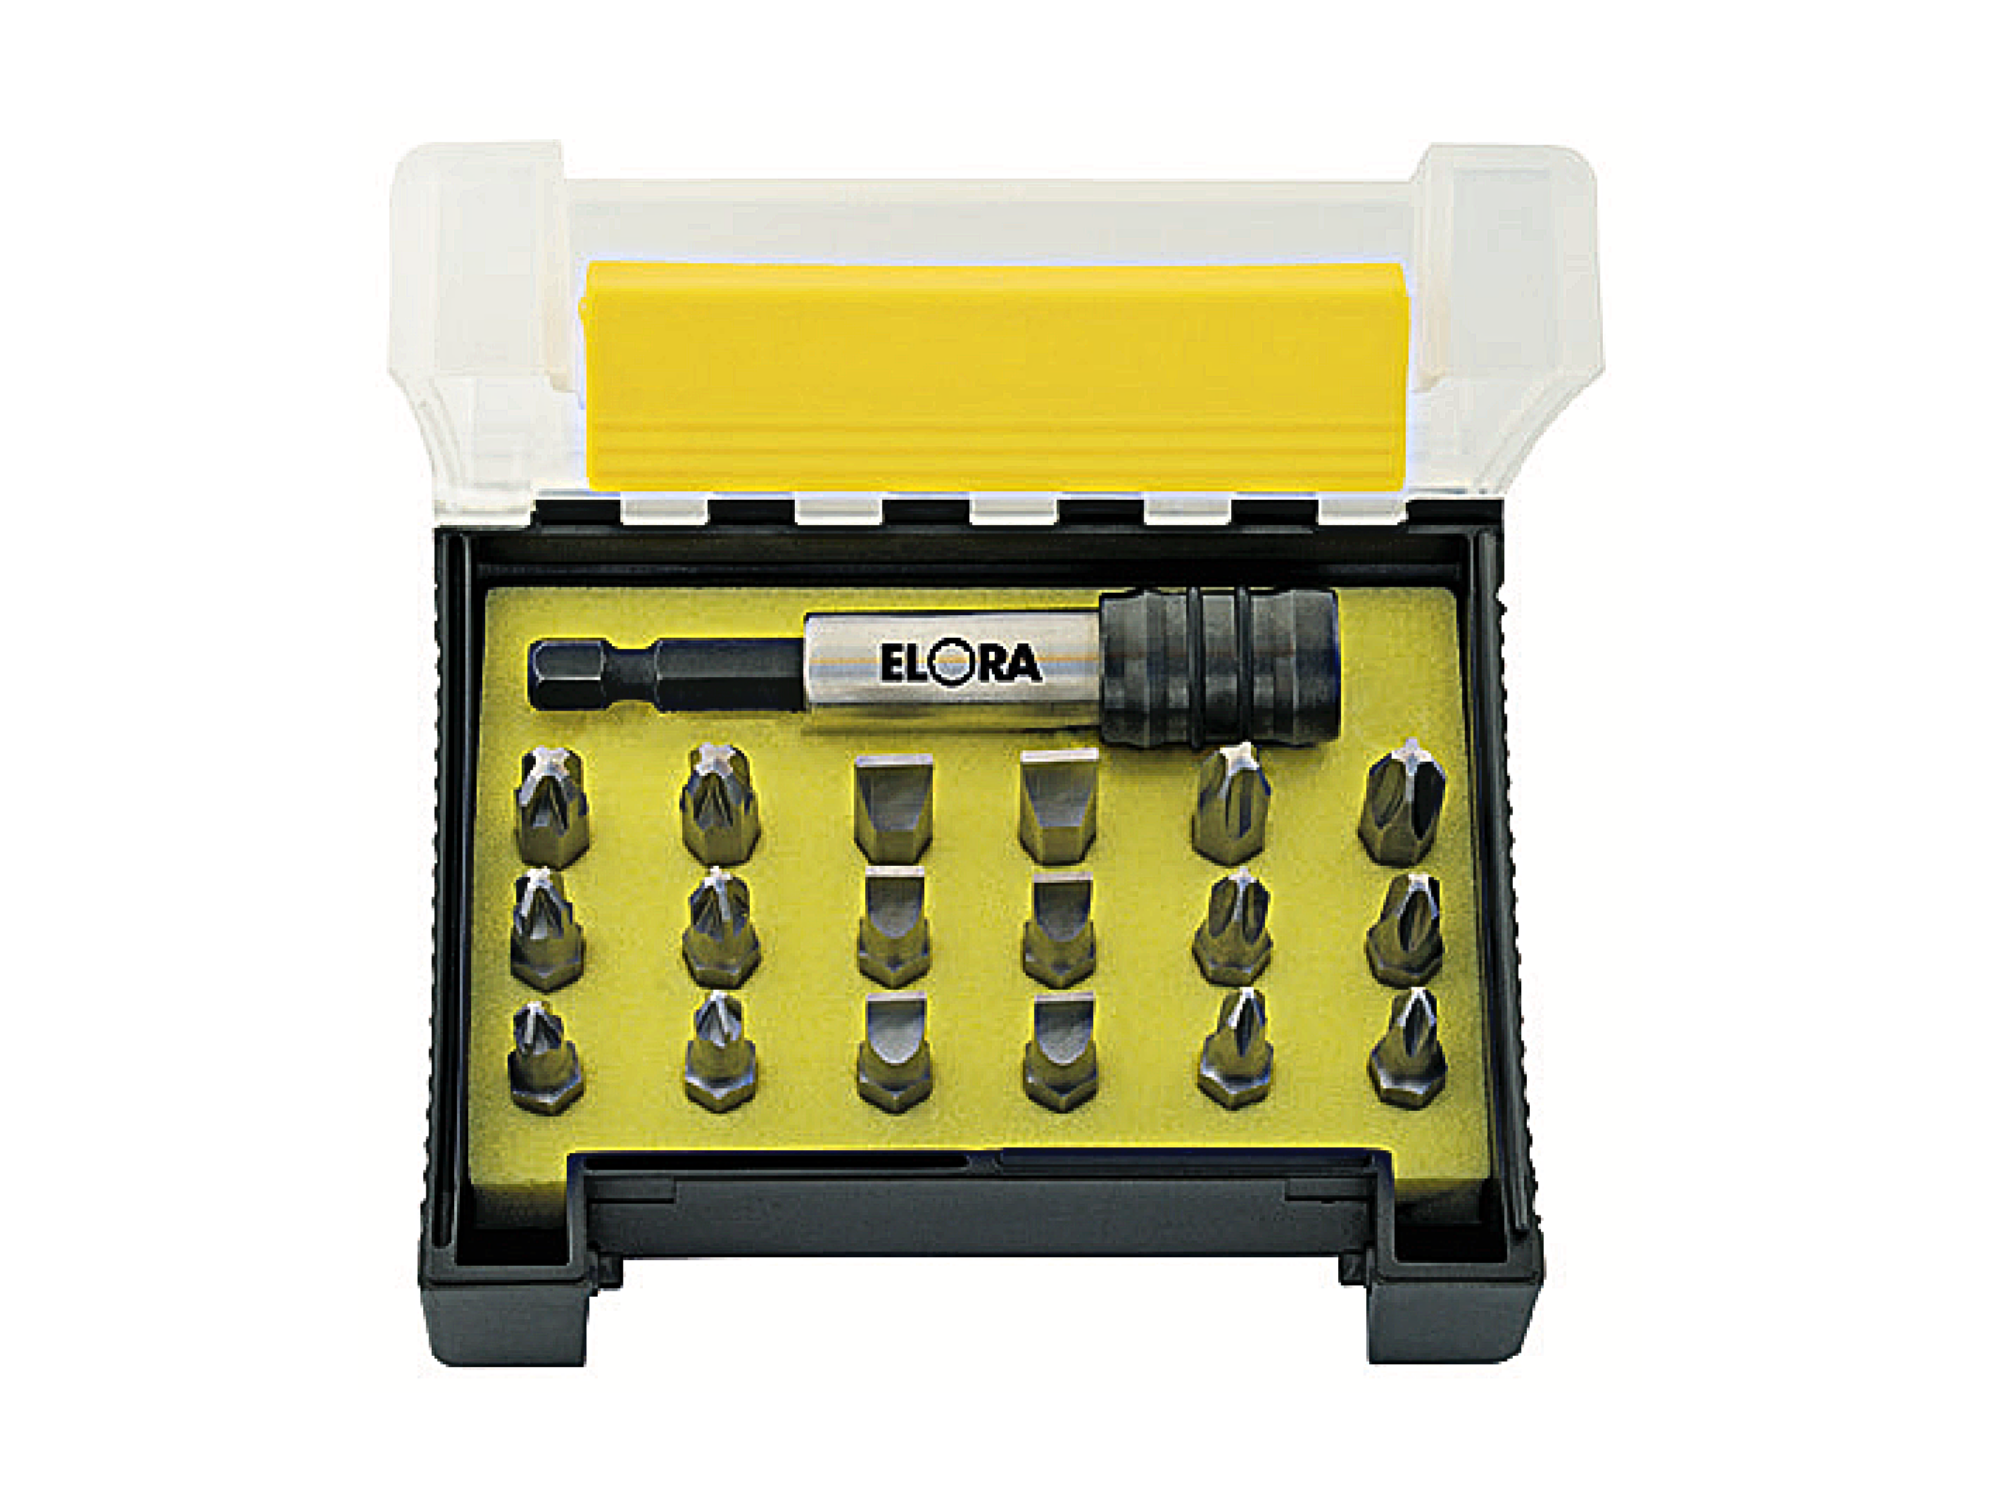 ELORA 3452ST Bit-Box, Stainless 1/4" (ELORA Tools) - Premium Bit-Box from ELORA - Shop now at Yew Aik.